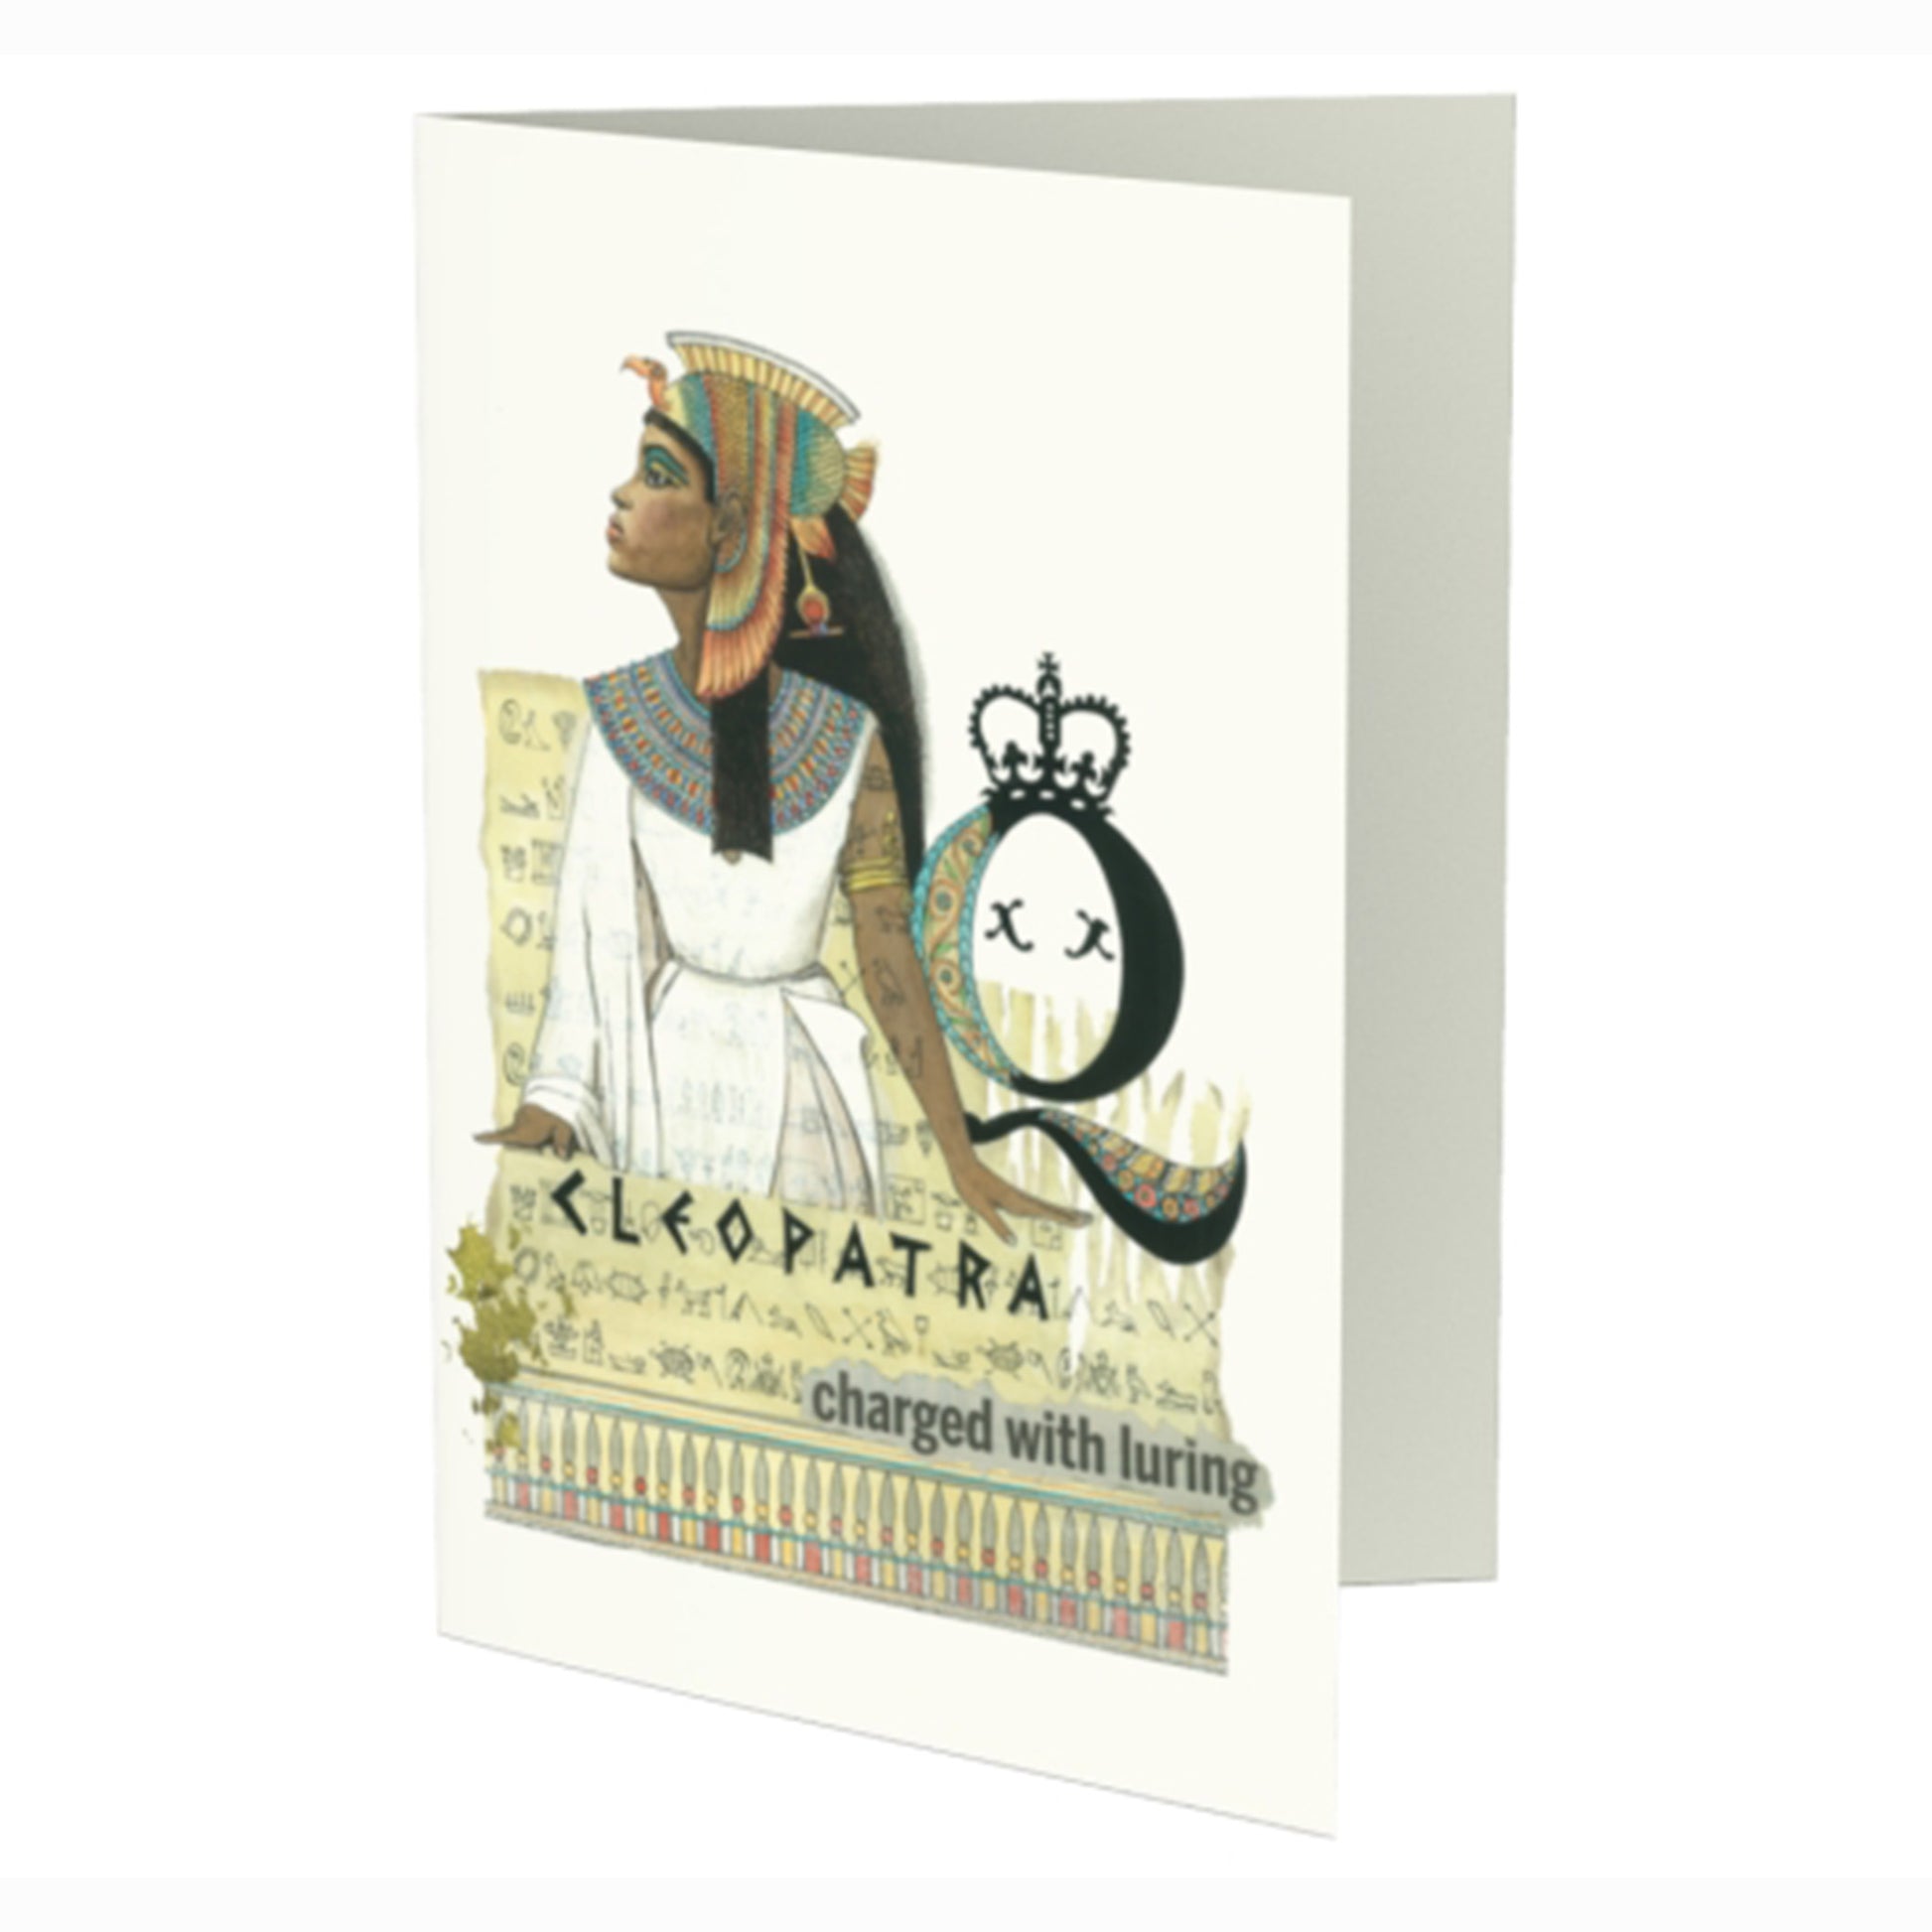 Cleopatra Art Greeting Card